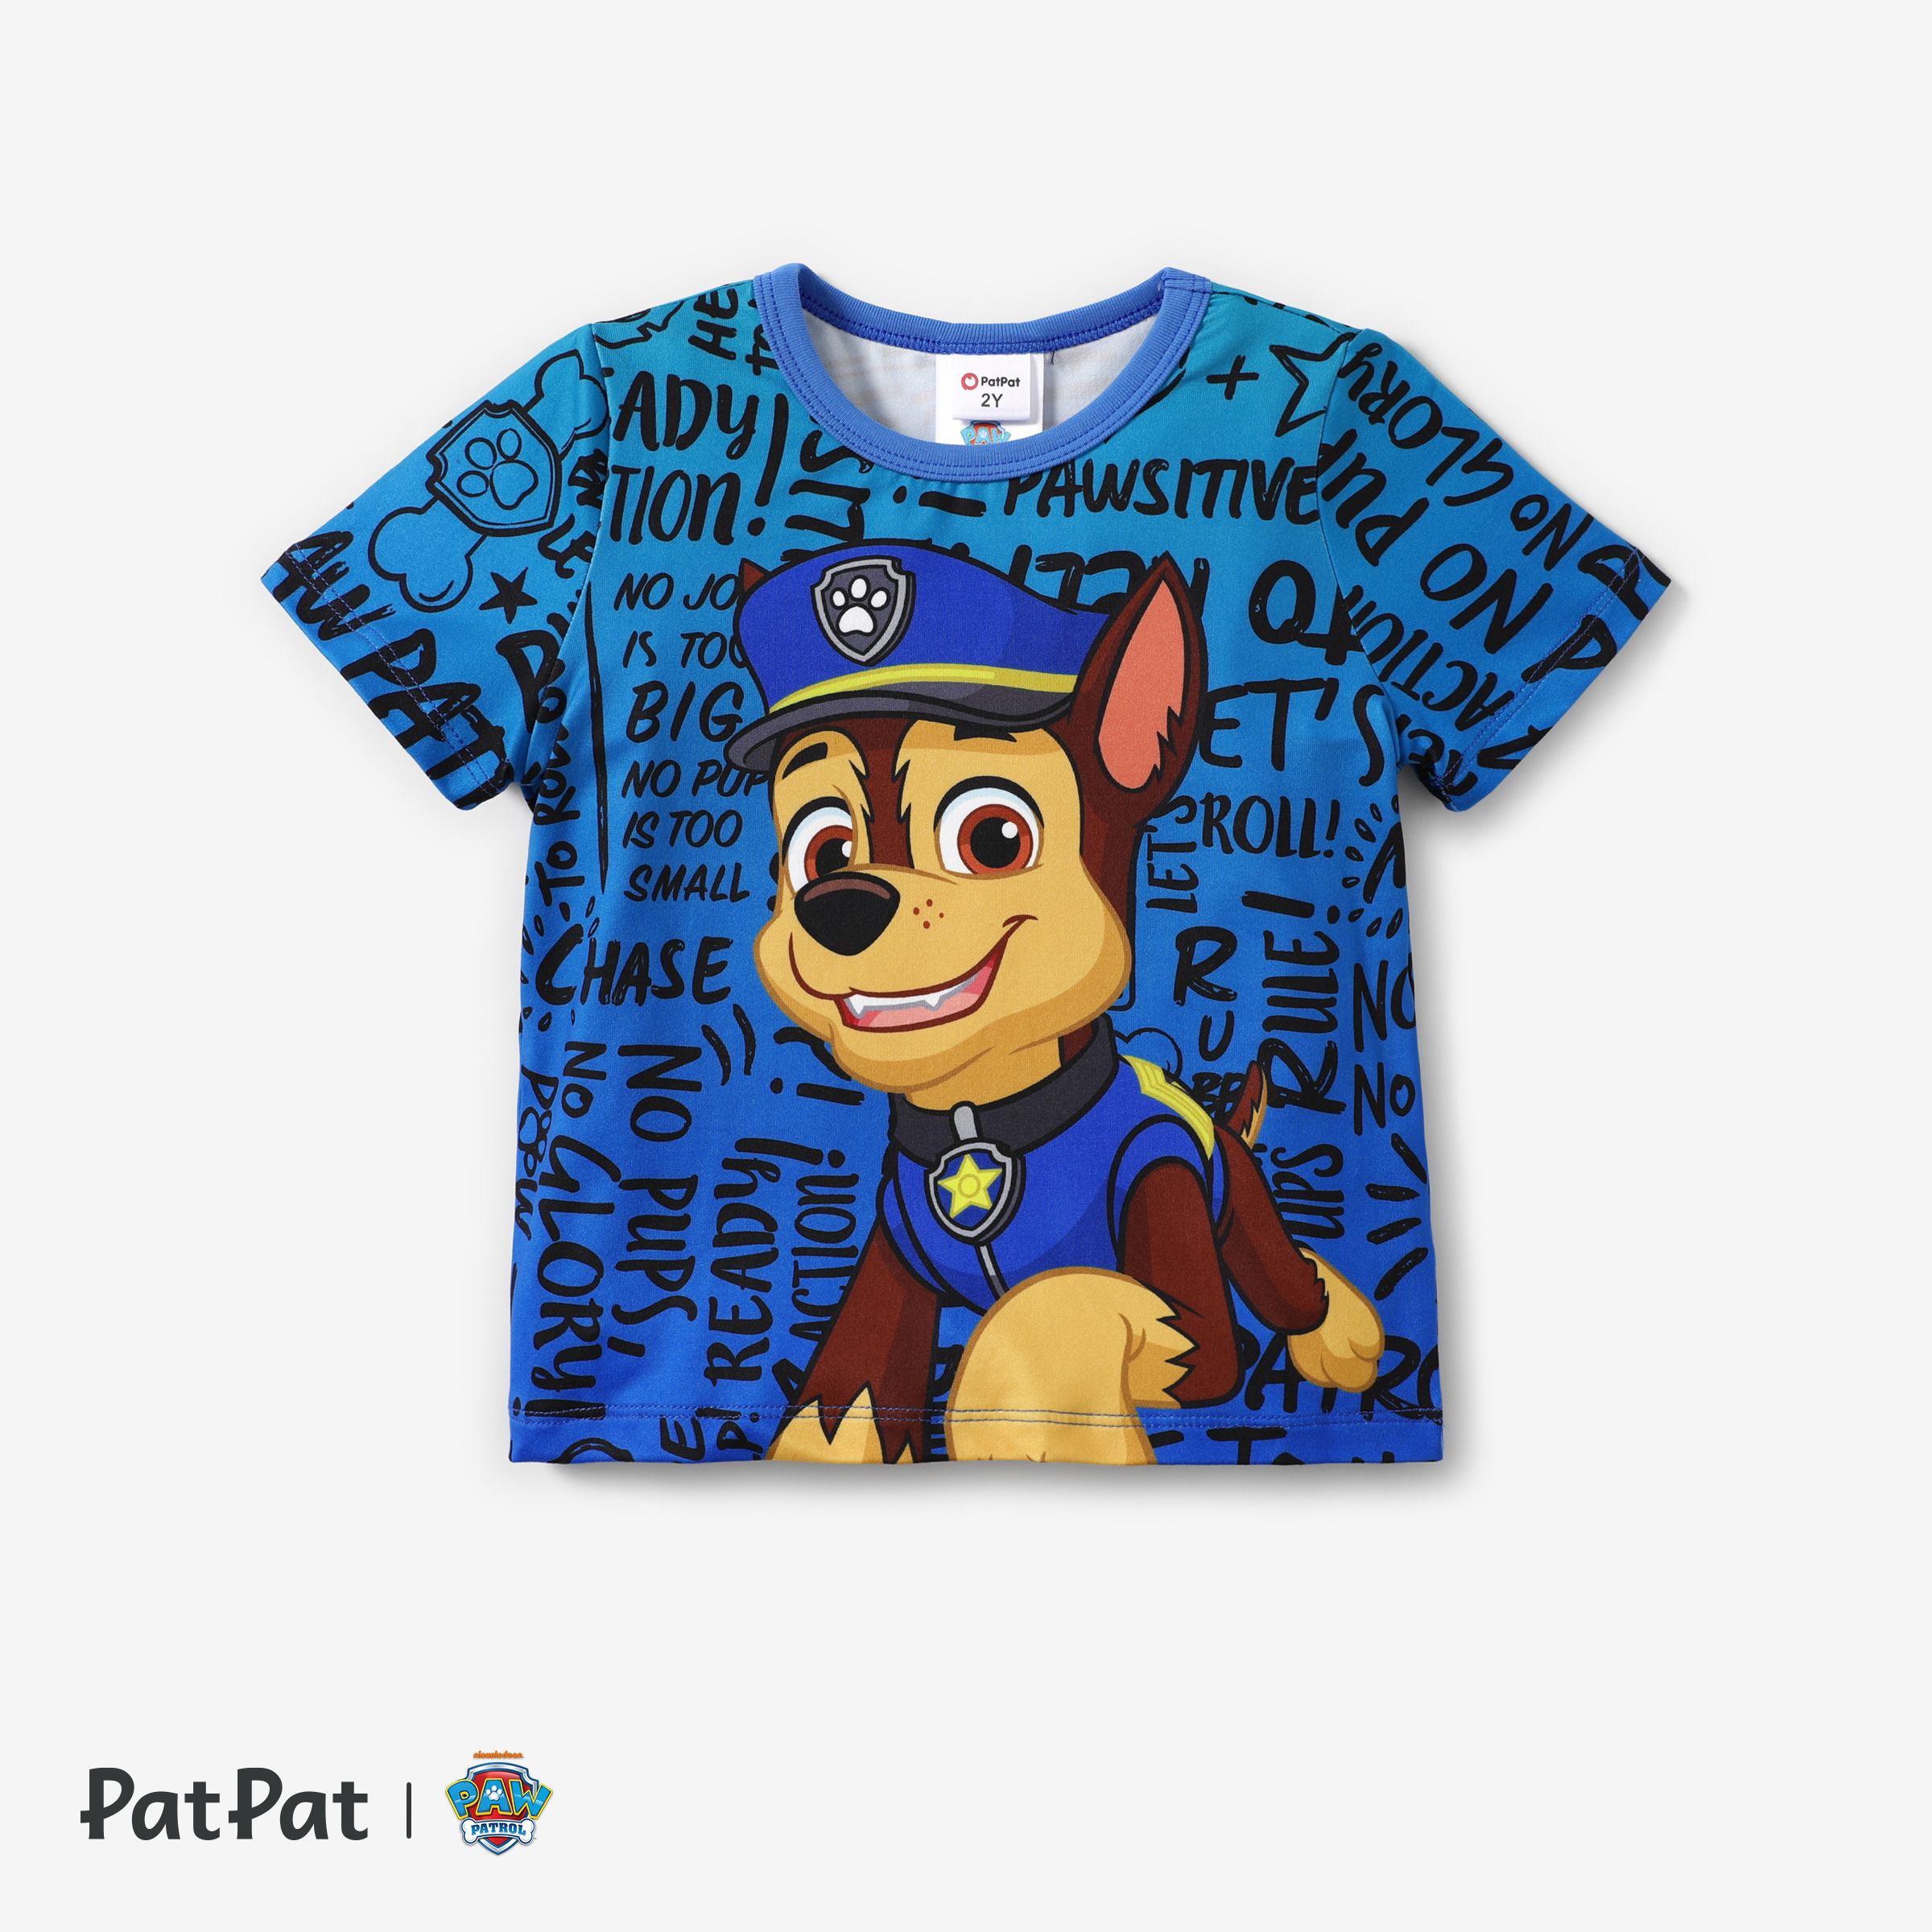 PAW Patrol 1pc  Toddler Girl/Boy Character Doodle Print  T-shirt